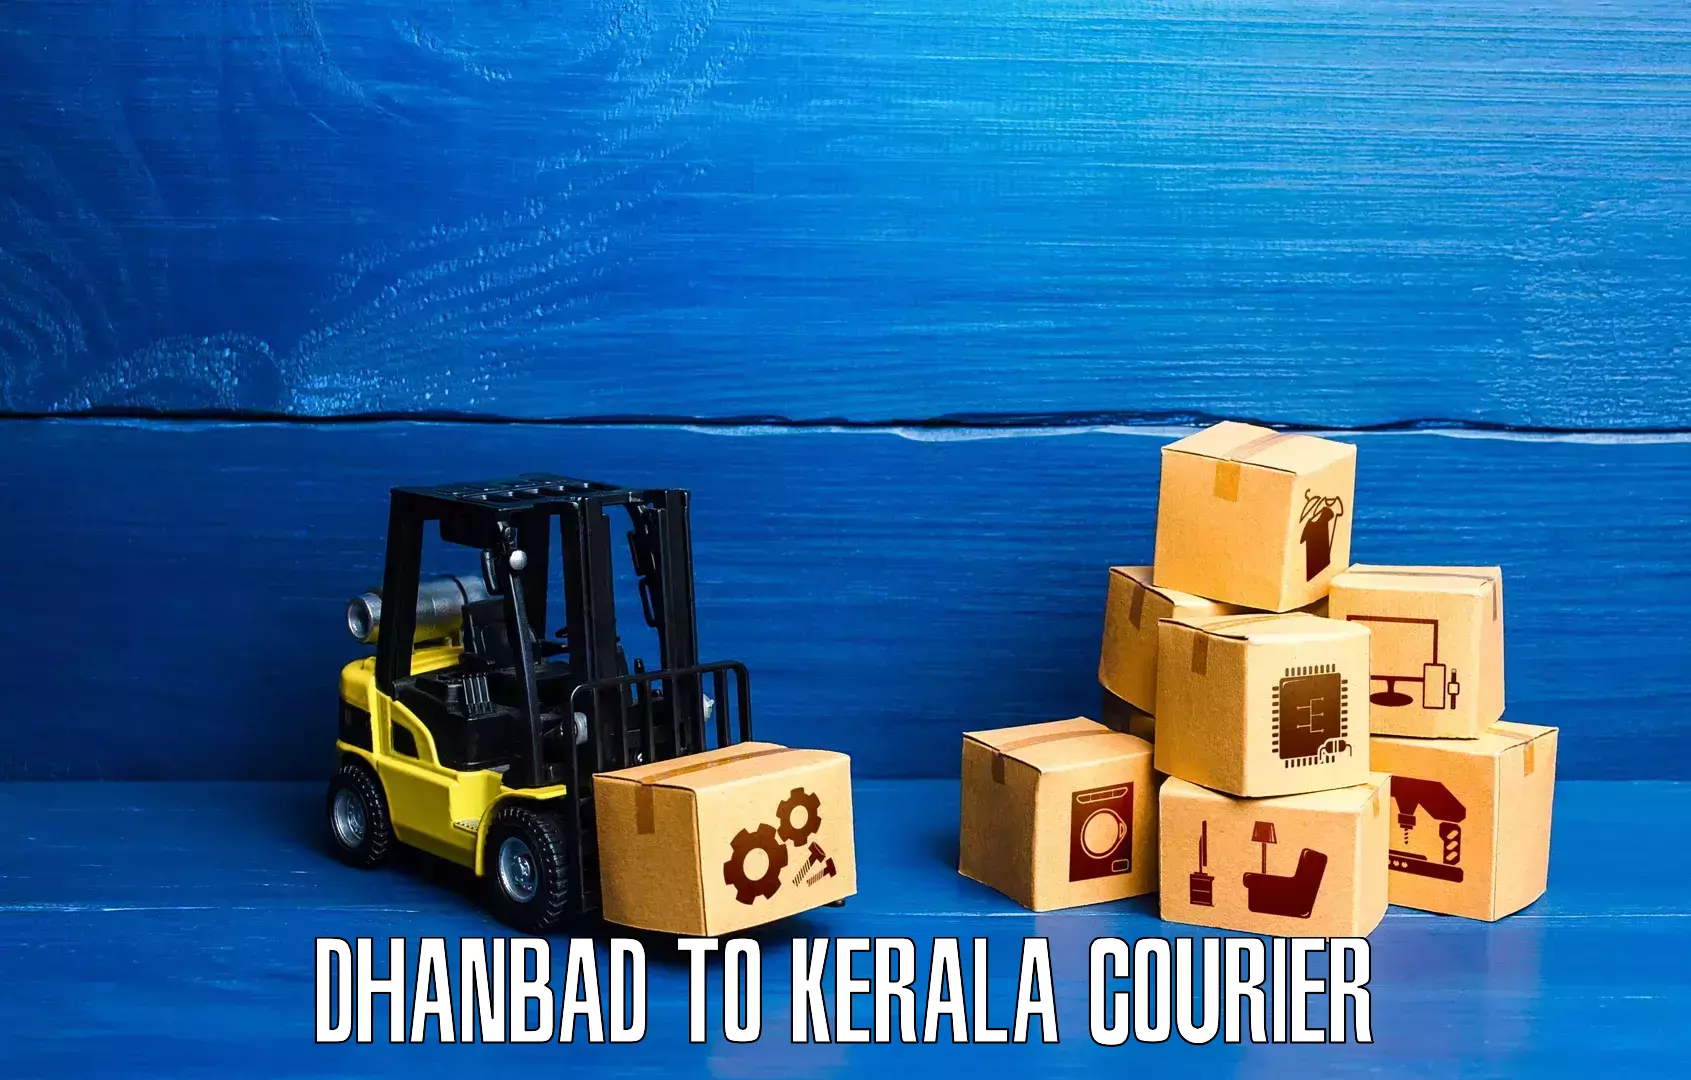 Global logistics network Dhanbad to Thrissur